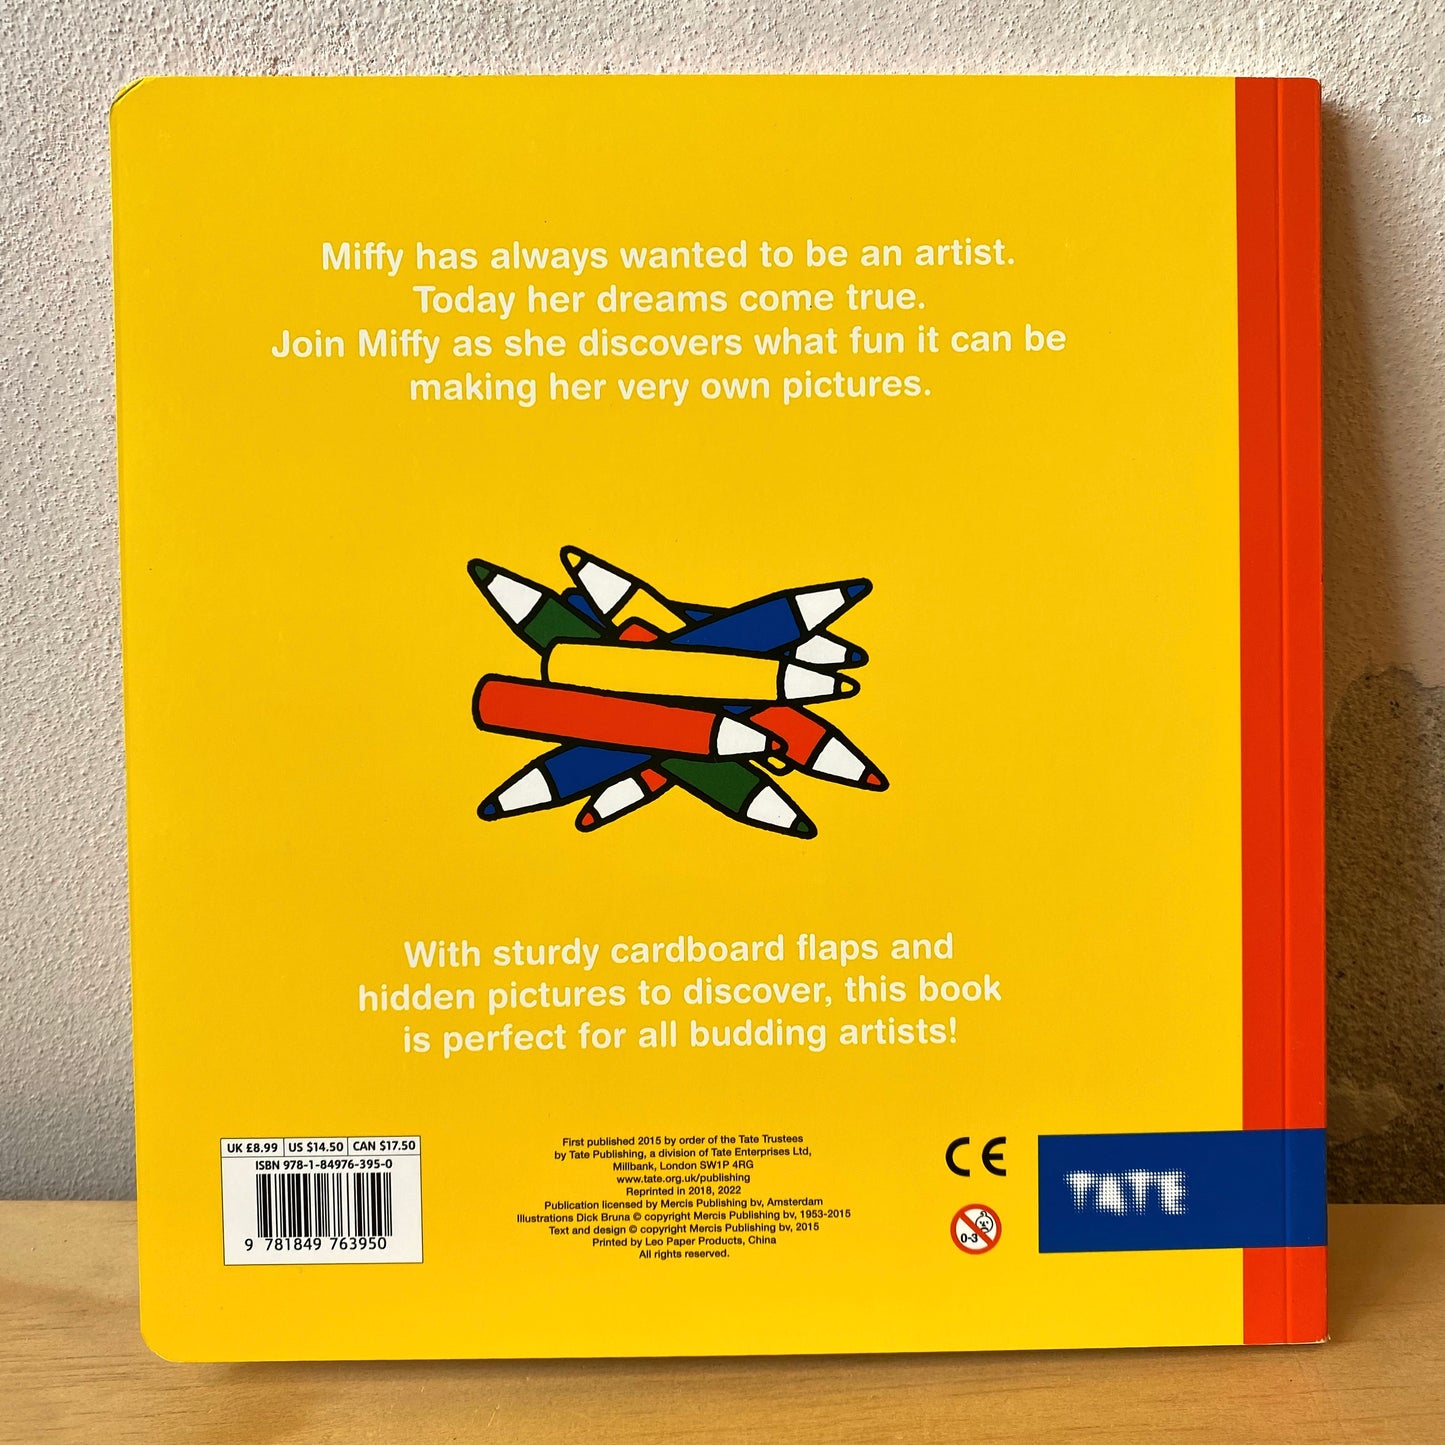 Miffy the Artist (Lift-the-Flap Book) - Dick Bruna